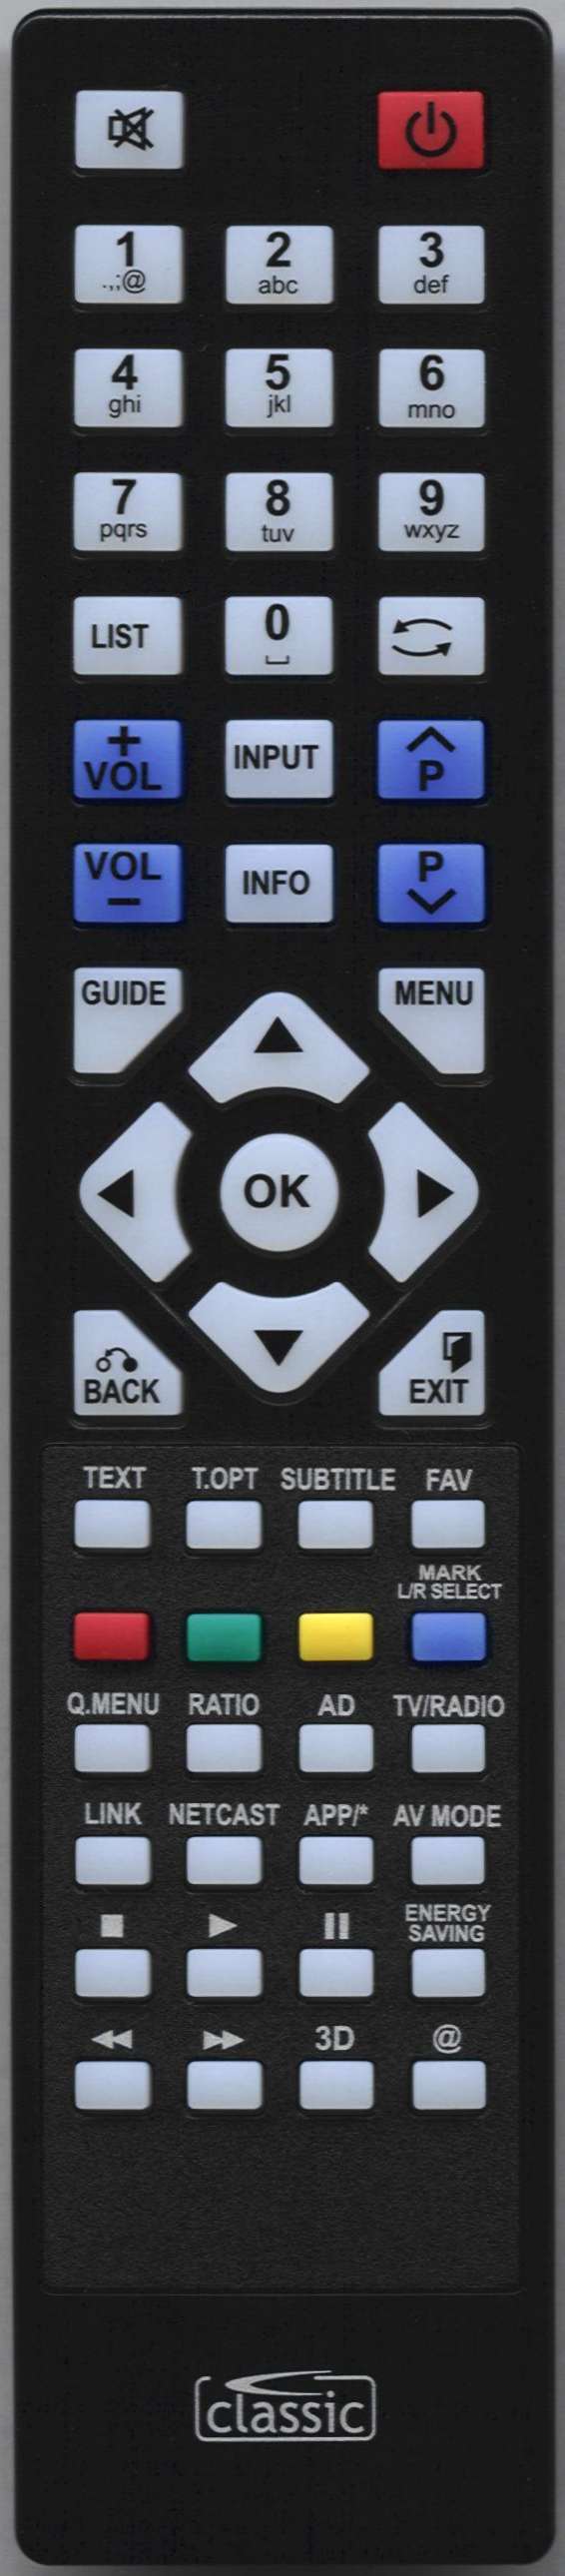 LG 42C460 Remote Control